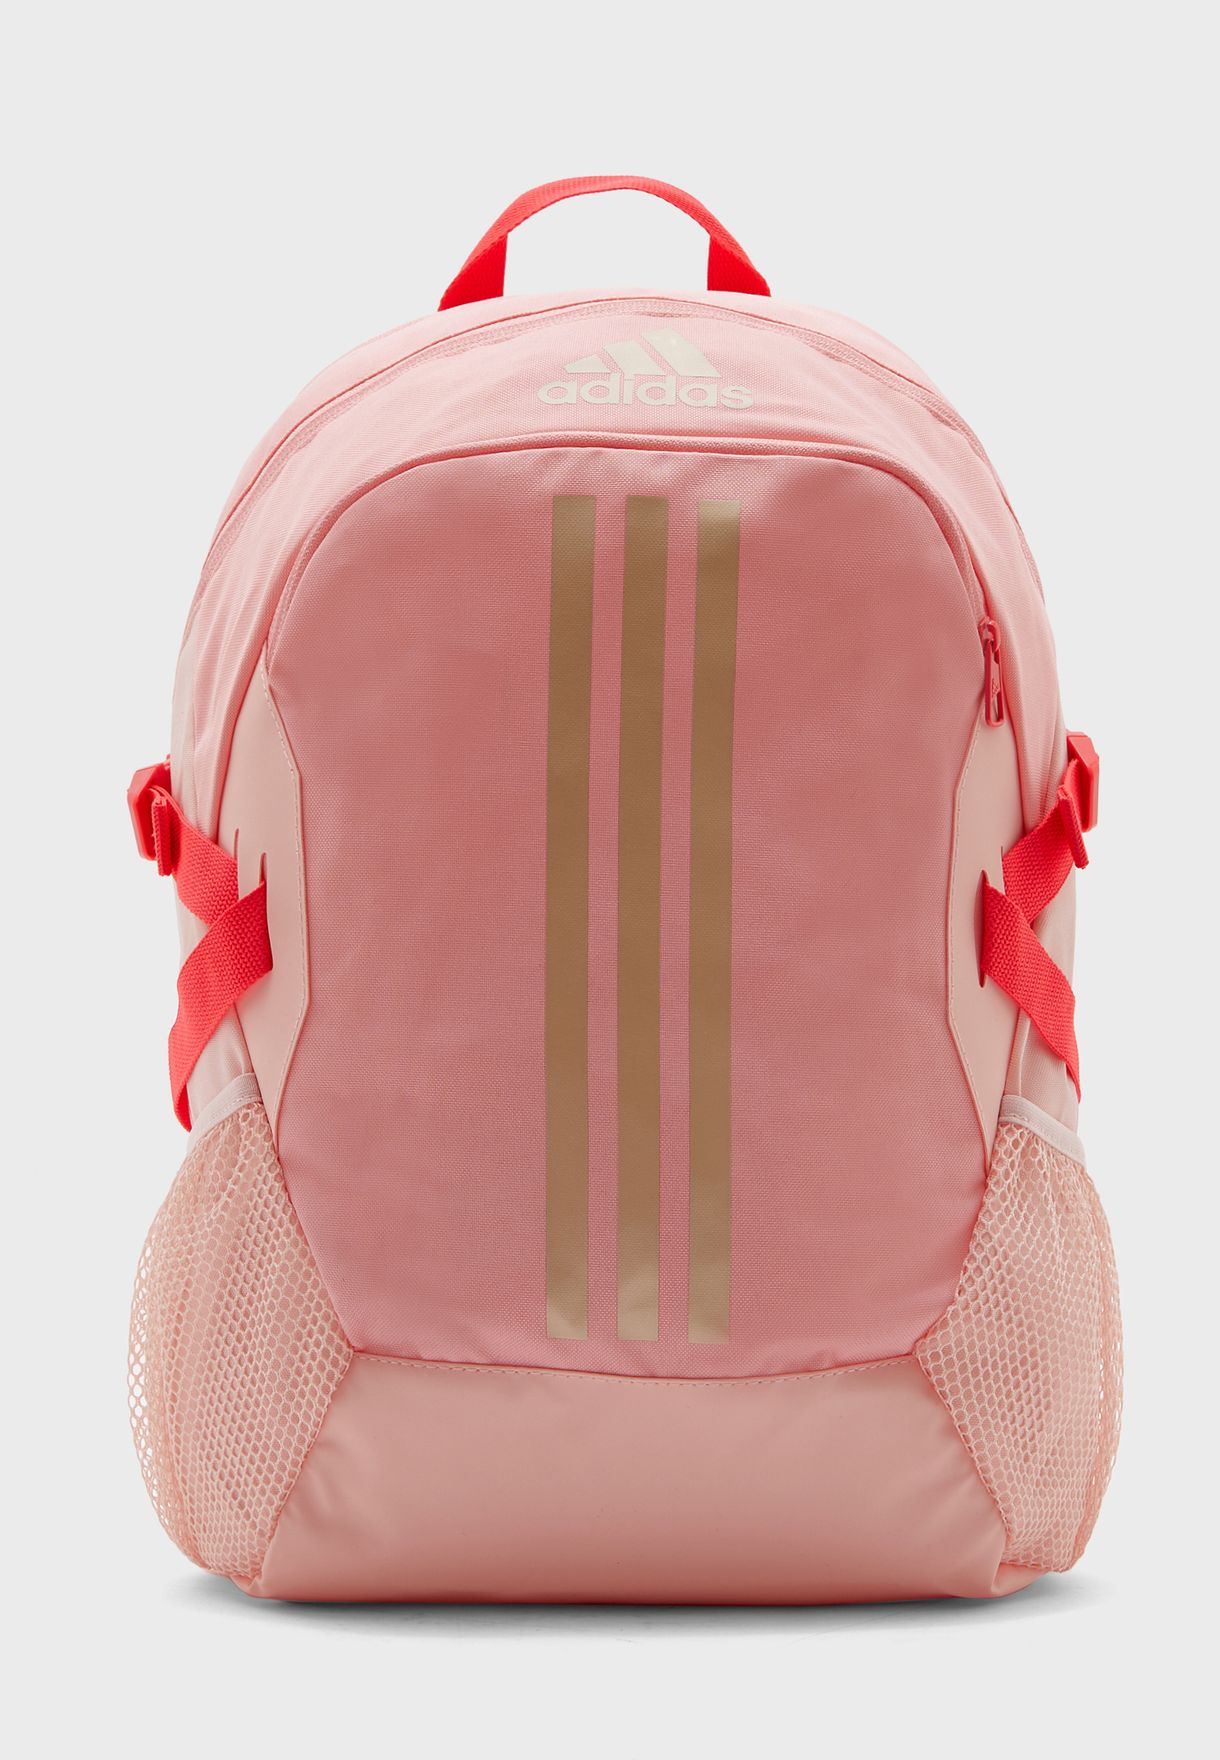 adidas pink bag